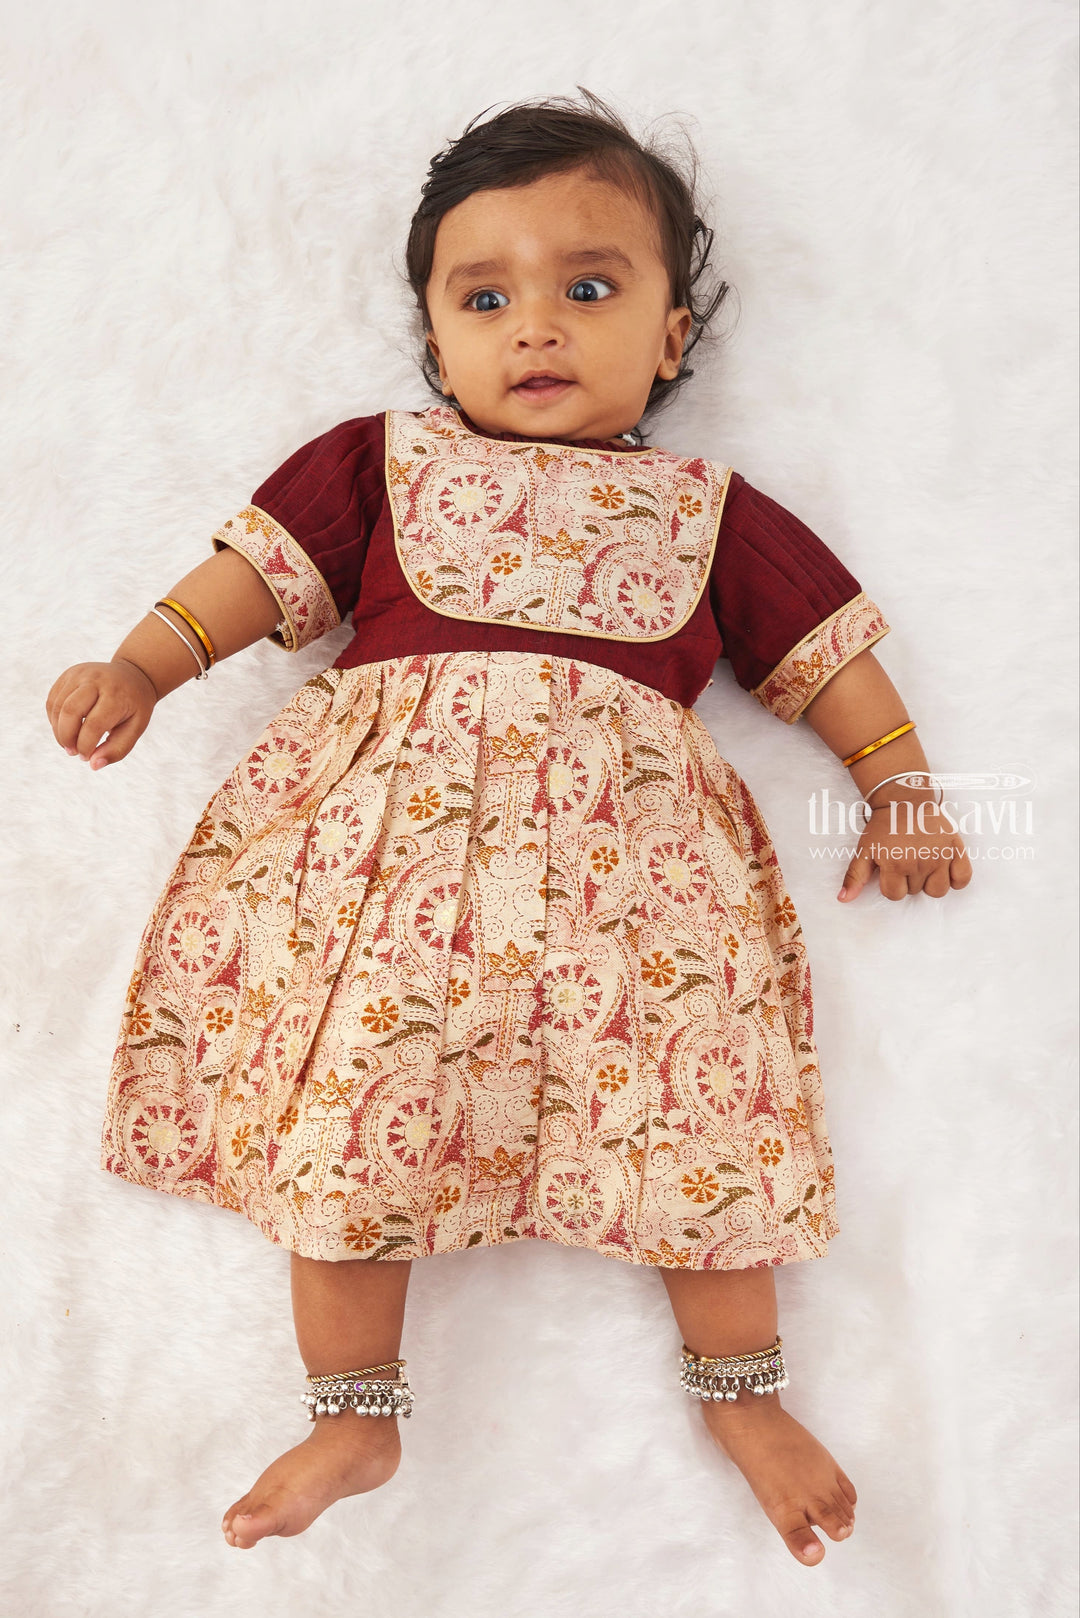 The Nesavu Baby Cotton Frocks Regal Paisley Print Toddler Dress - Maroon Elegance Nesavu 12 (3M) / Maroon / Cotton BFJ493B-12 Toddler's Regal Paisley Print Occasion dress | Premium Baby Girls Frocks | The Nesavu